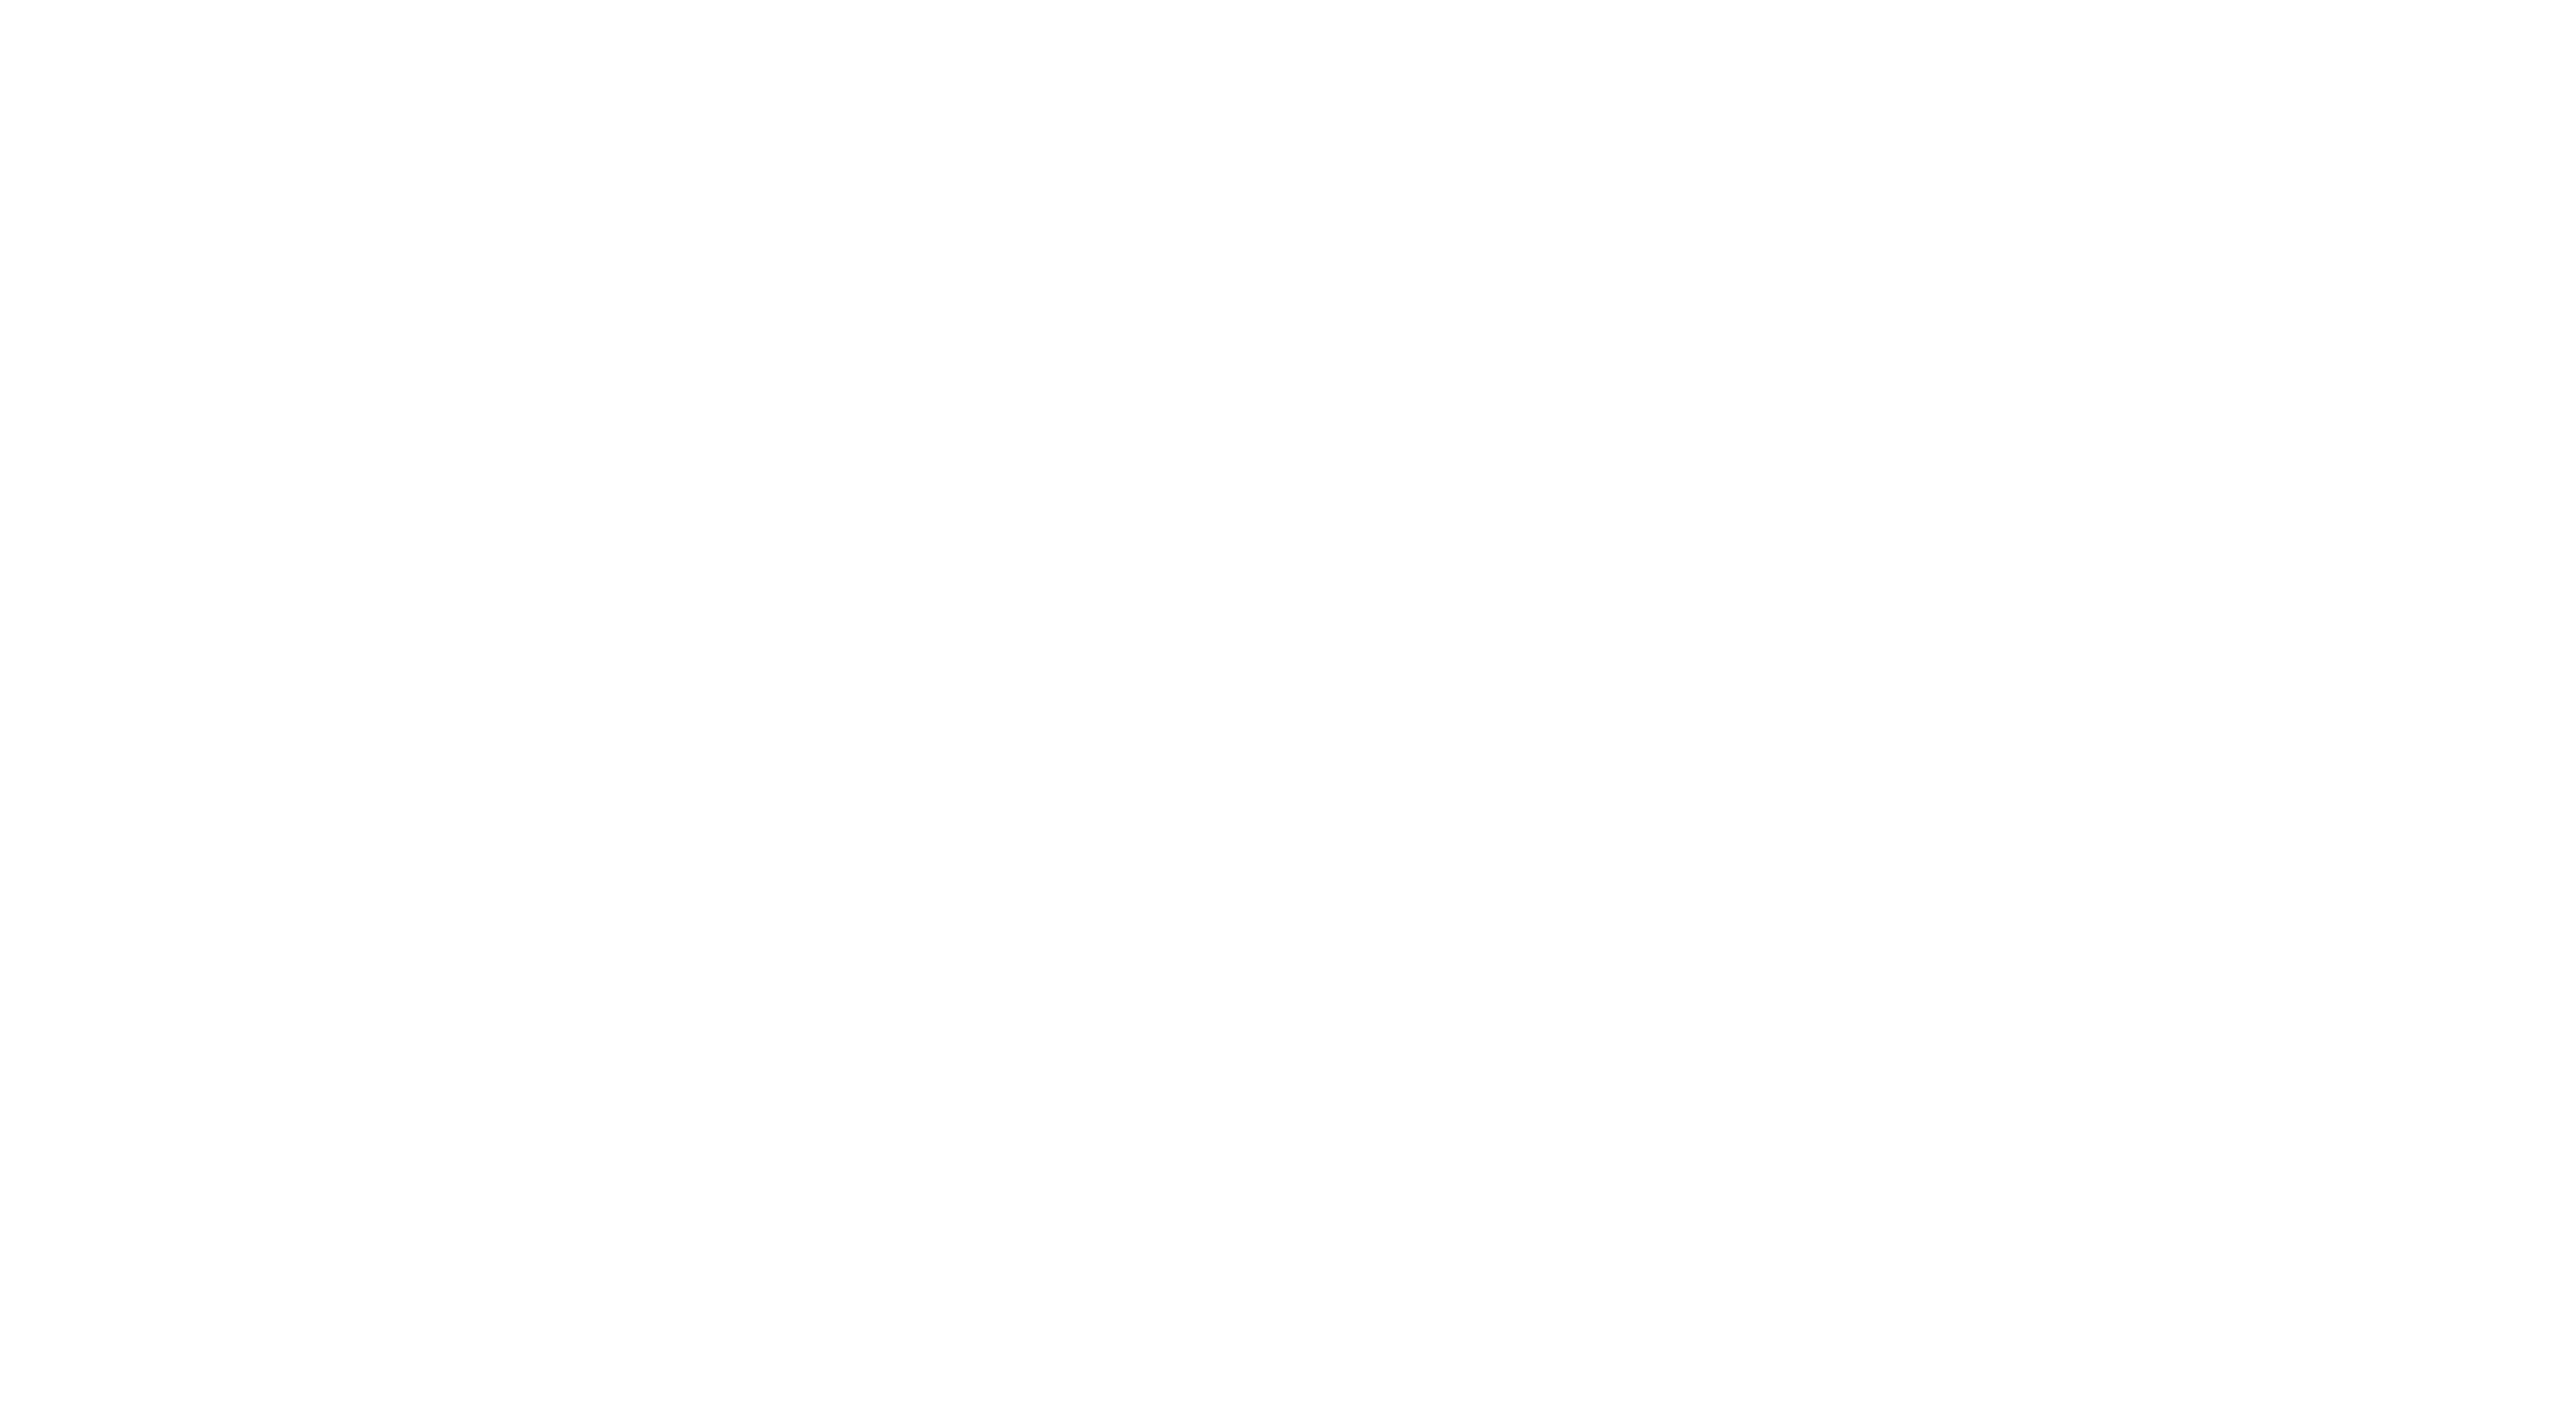 Black world map with white outline. Blue dots marking CORE's programs in California, Navajo Nation, US/Mexico Border, Louisiana, Chicago, Georgia, North Carolina, Brazil, Haiti, Ukraine, Romania, Poland, Sudan, Turkey, Pakistan, India.